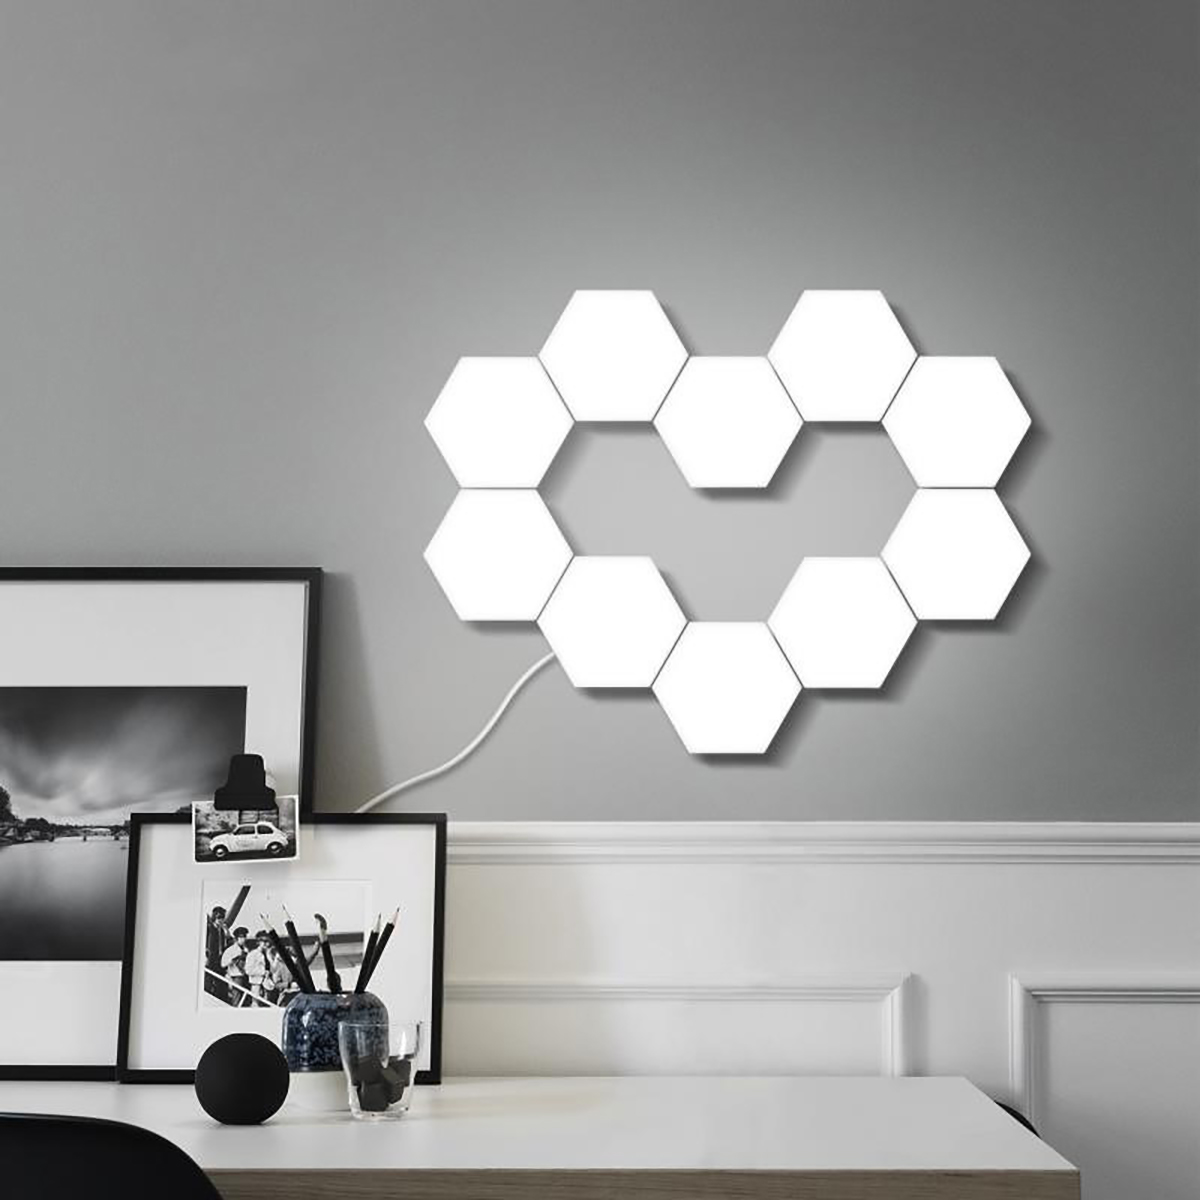 4x-Modular-LED-Touch-Wall-Lamp-Hexagonal-Honeycomb-Magnetic-Quantum-Night-Light-1789908-6